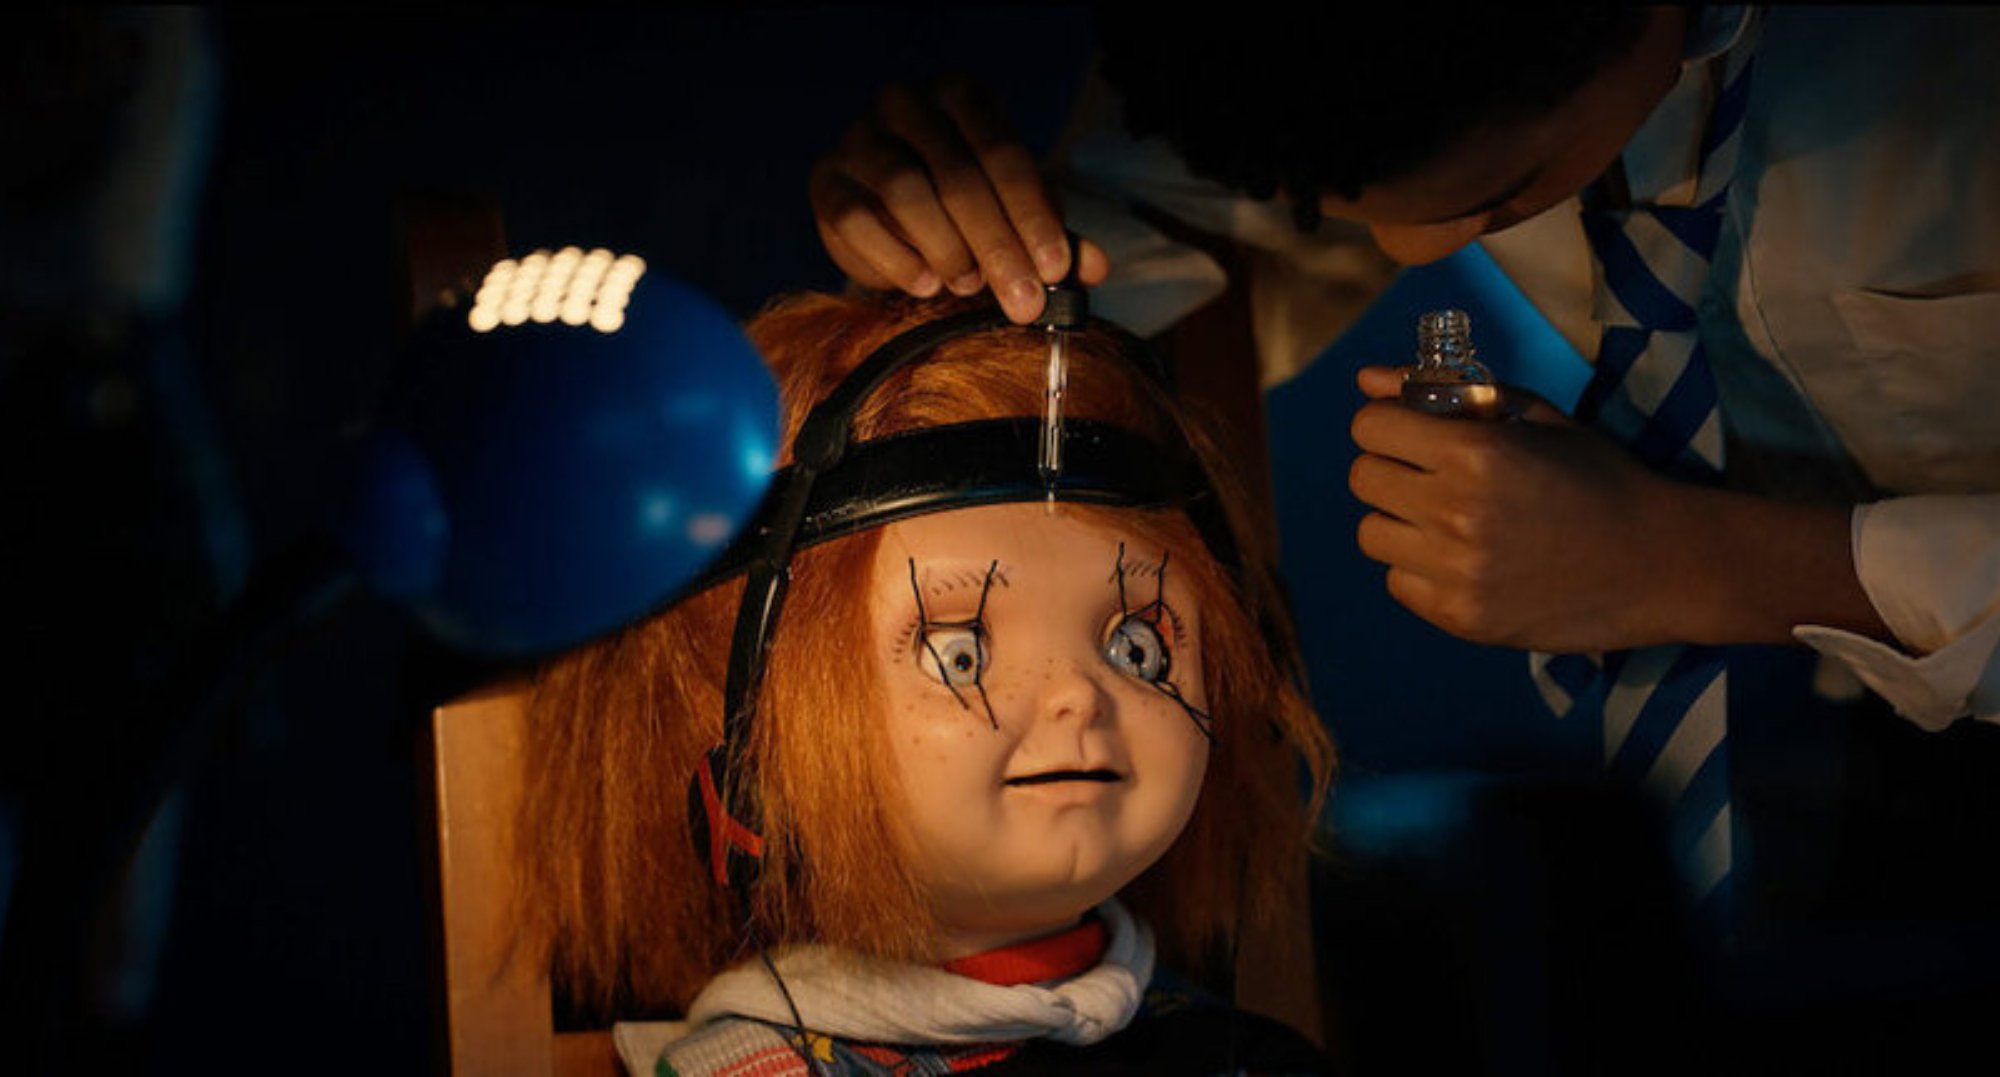 Devon and Chucky in 'Chucky' Season 2, Episode 3 in 'A Clockwork Orange' scene.